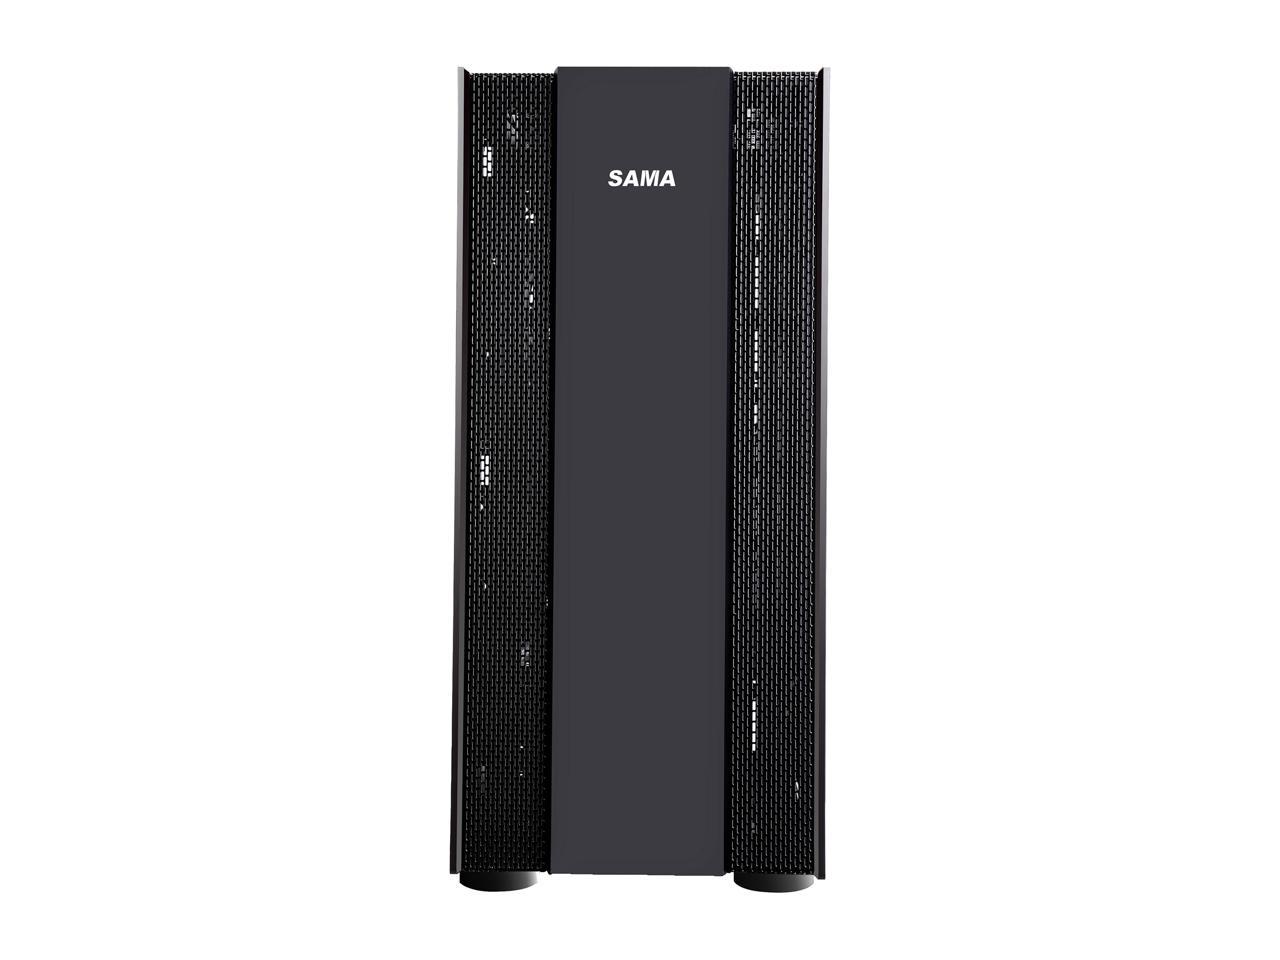 Sama Sama-Z3 Black Steel / Tempered Glass Atx Mid Tower Computer Case